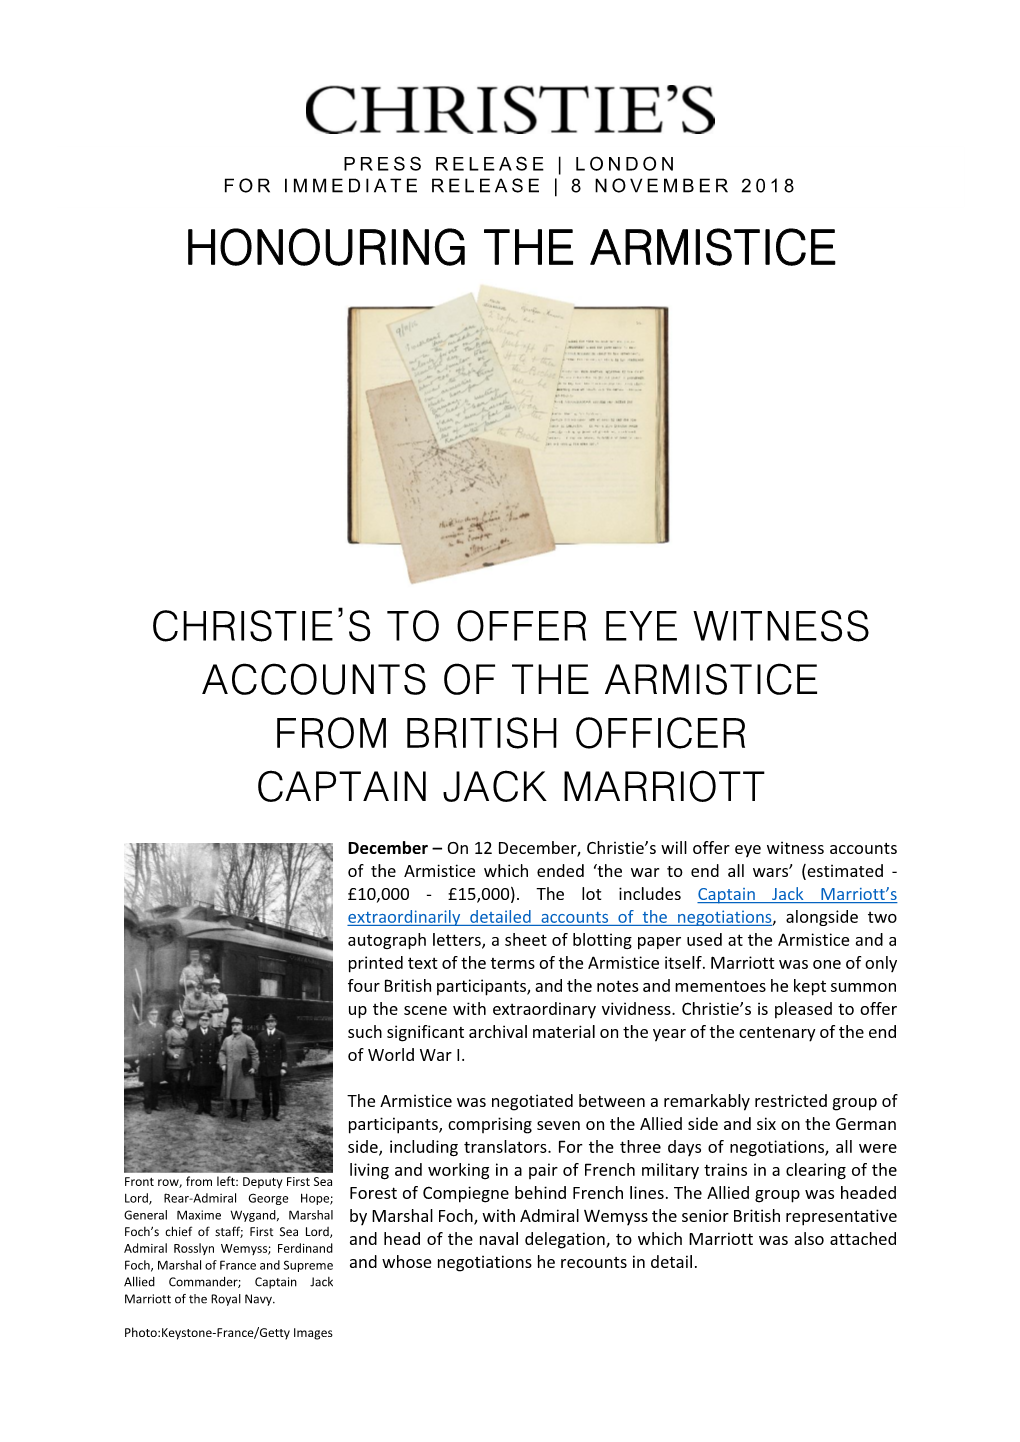 Honouring the Armistice